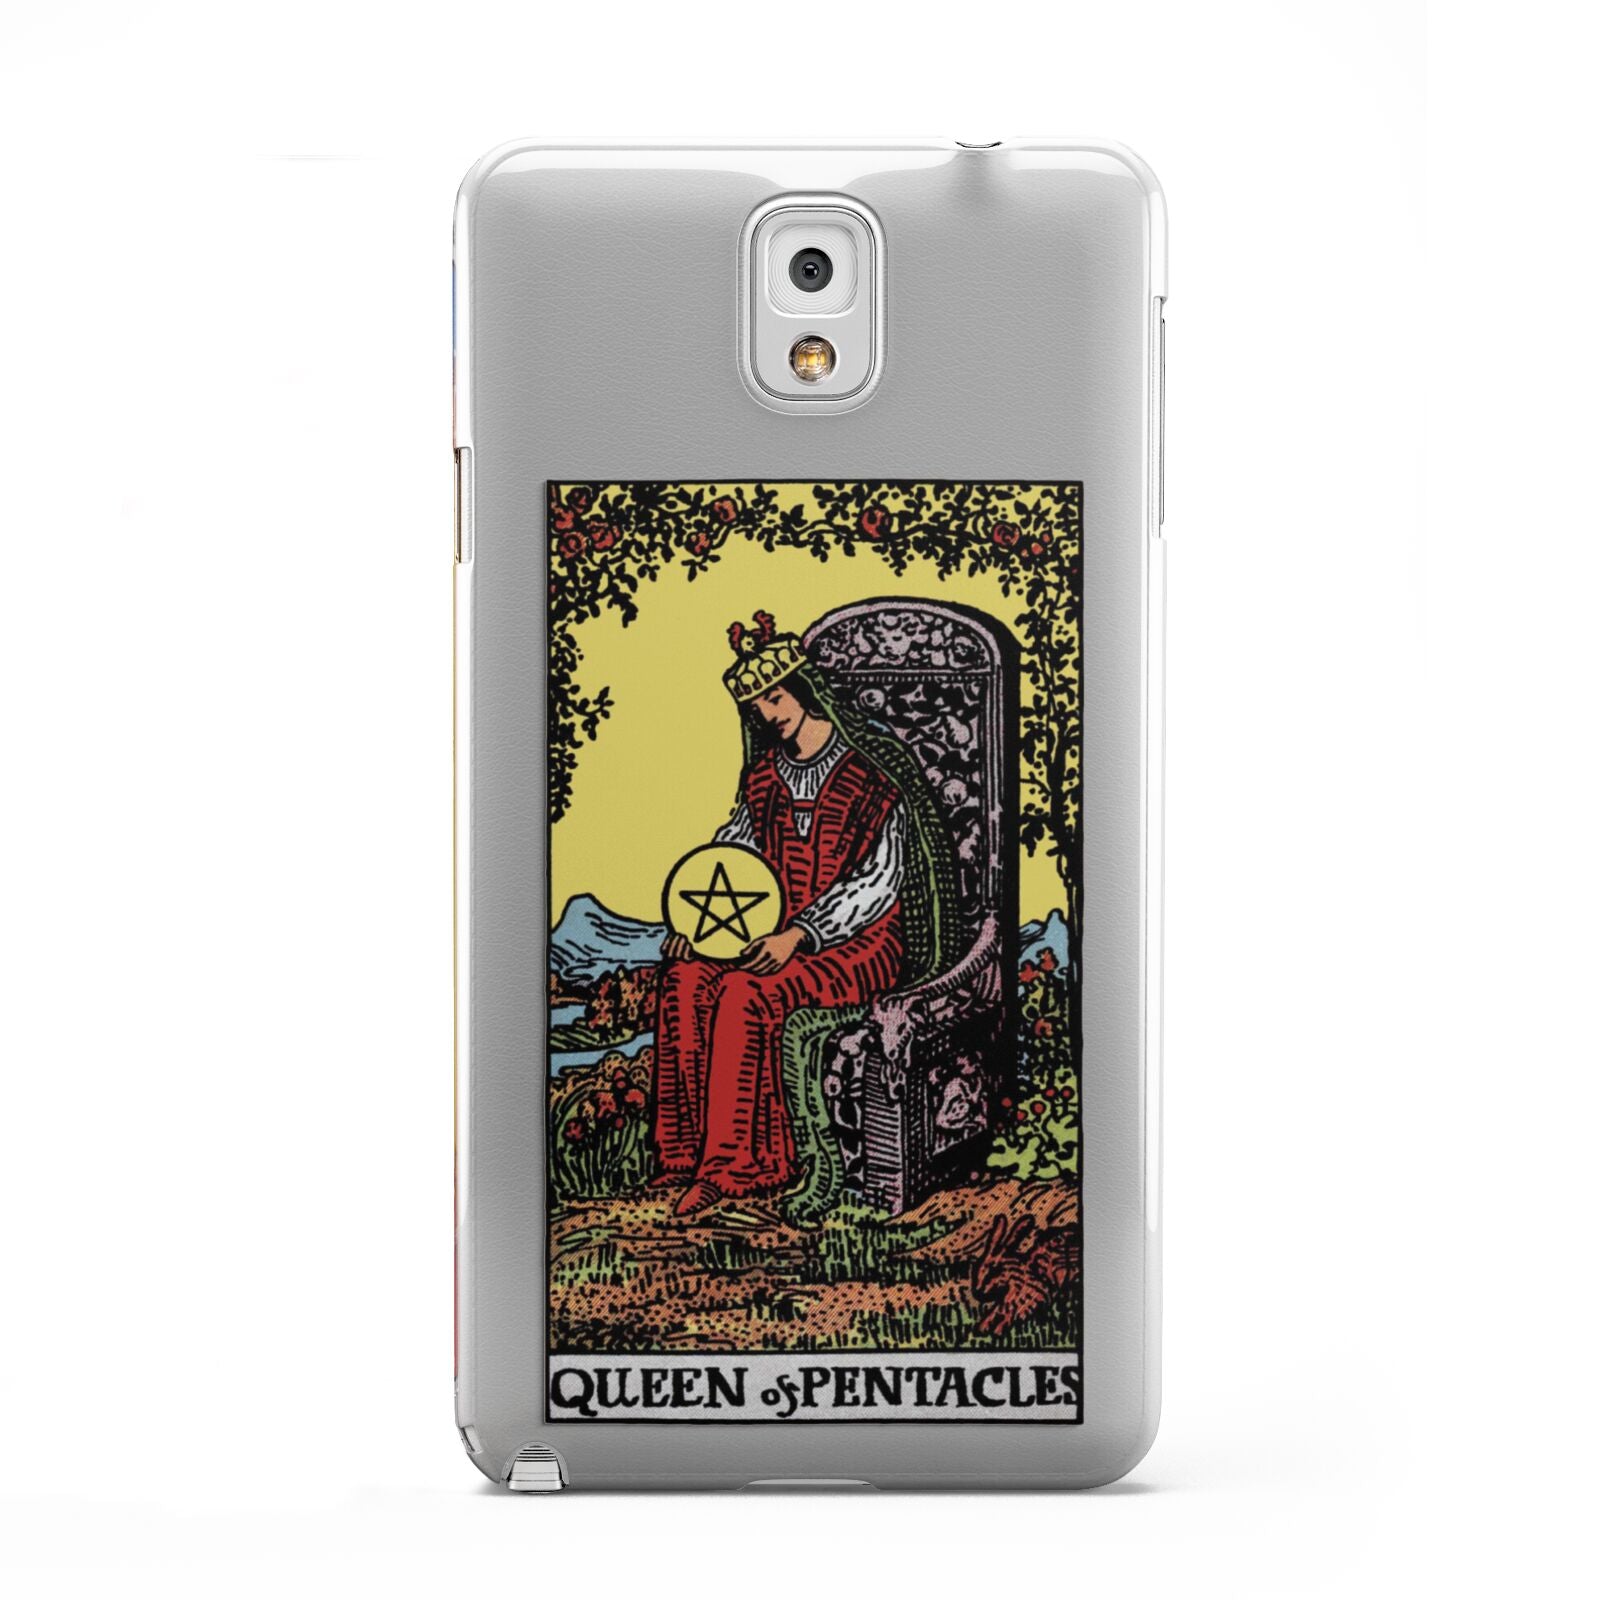 Queen of Pentacles Tarot Card Samsung Galaxy Note 3 Case